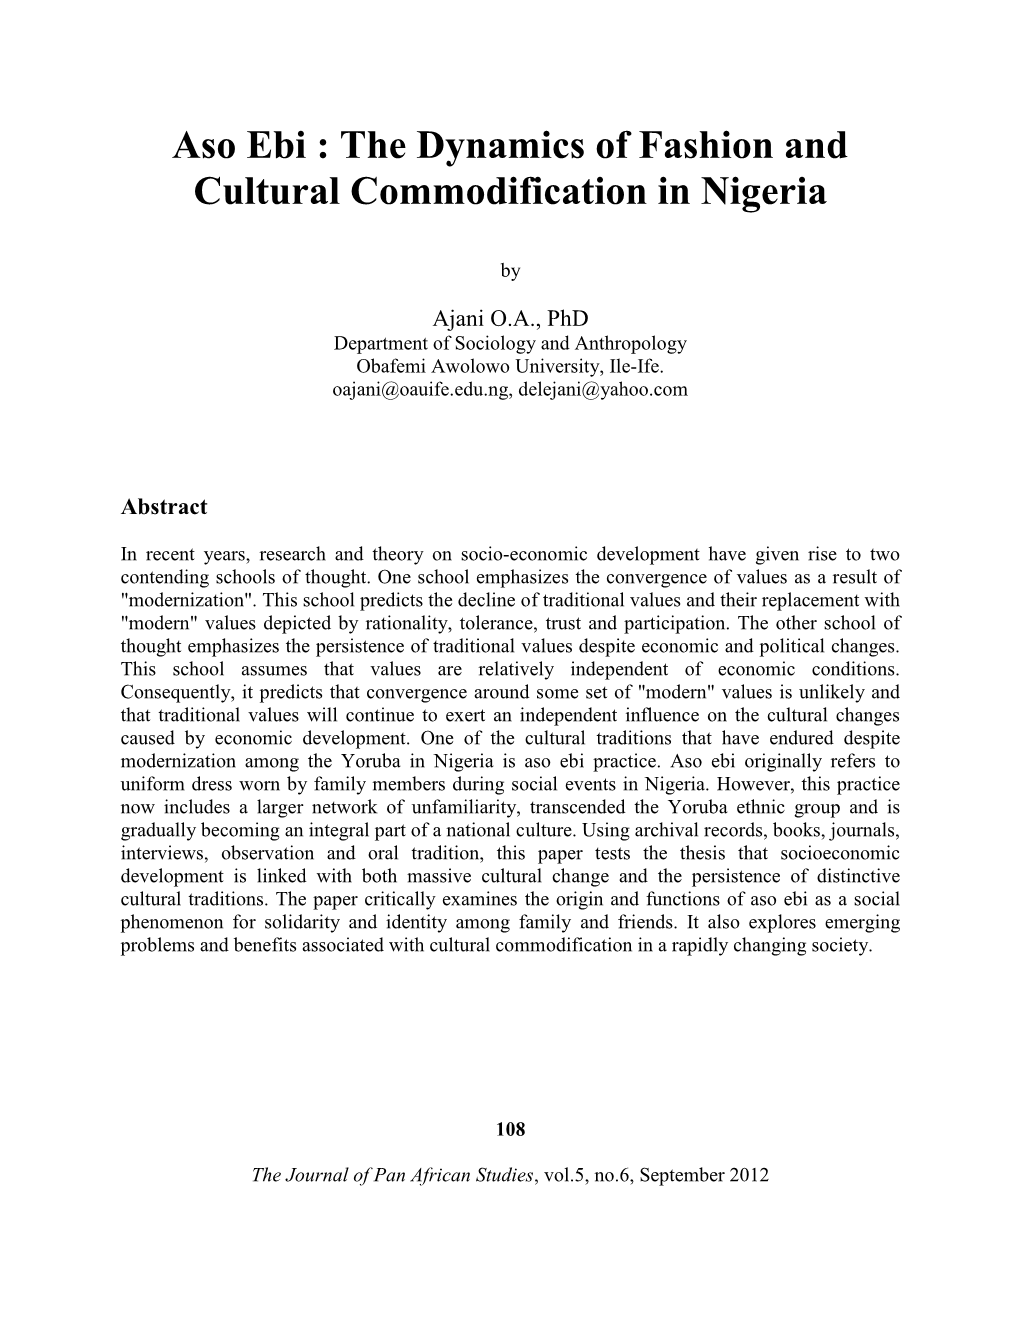 Aso Ebi : the Dynamics of Fashion and Cultural Commodification in Nigeria